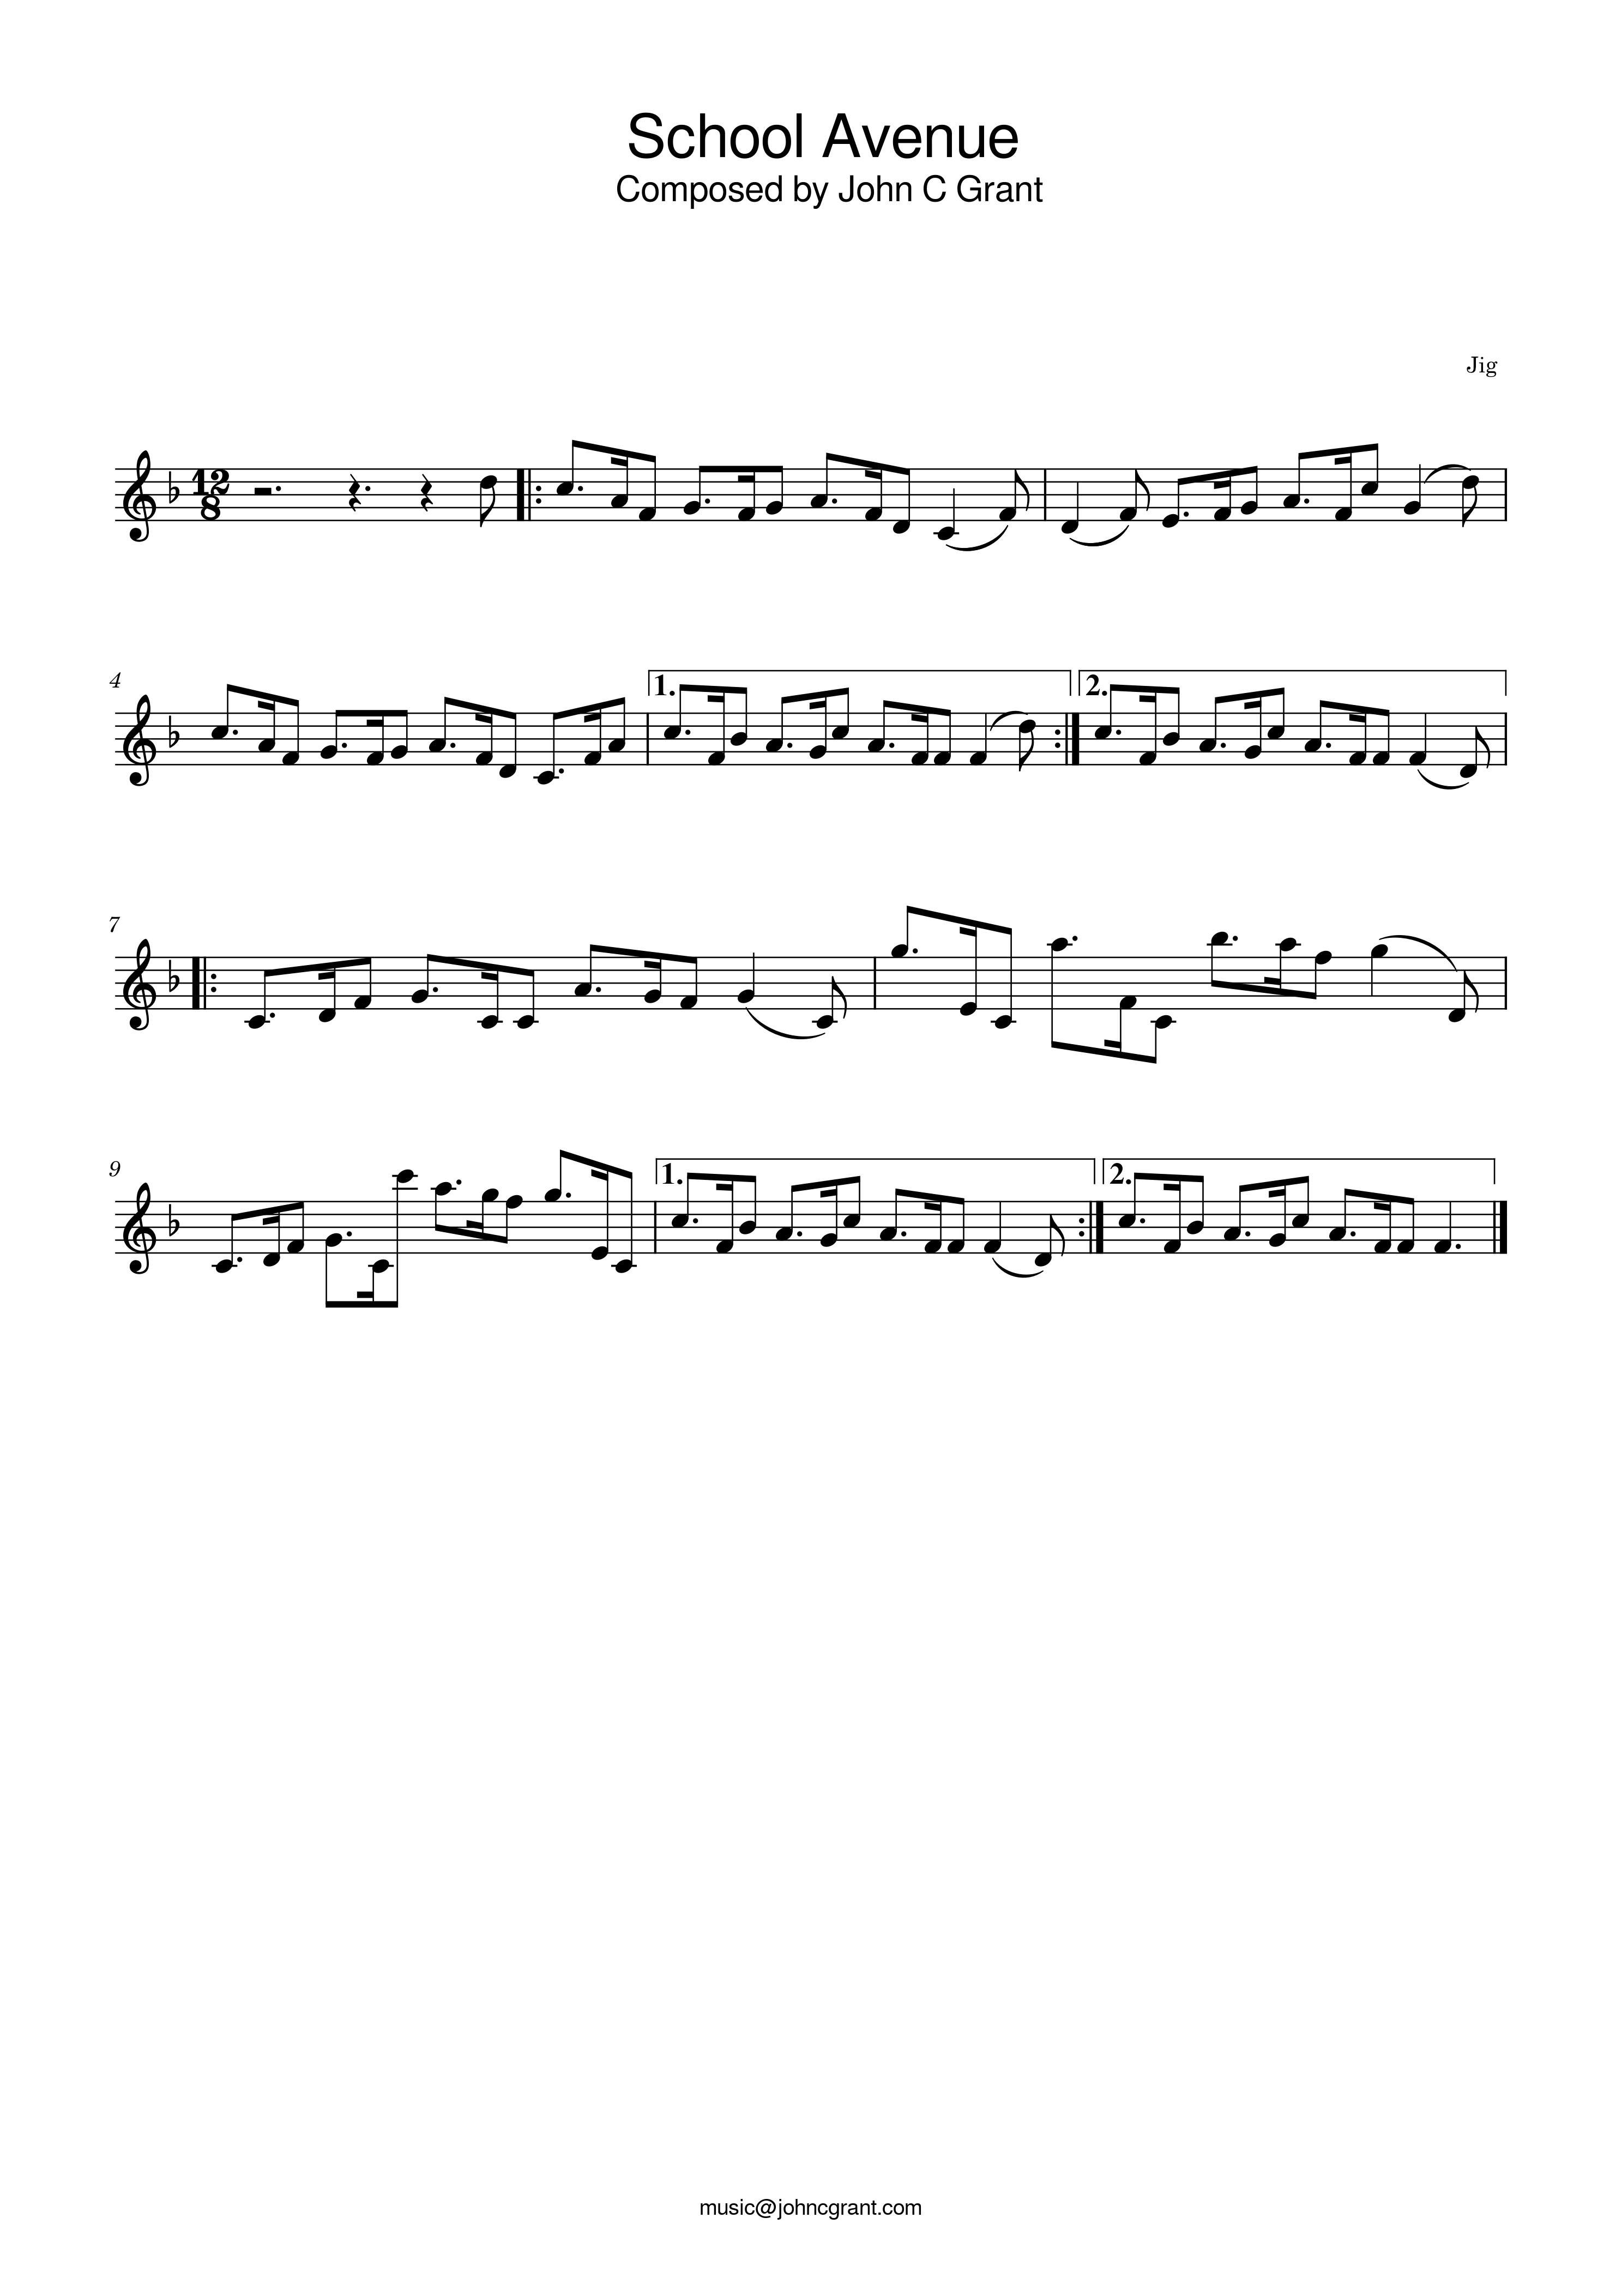 School Avenue - Composed by John C Grant (https://johncgrant.com). Traditional composer from Kilmarnock, Ayrshire, Scotland.